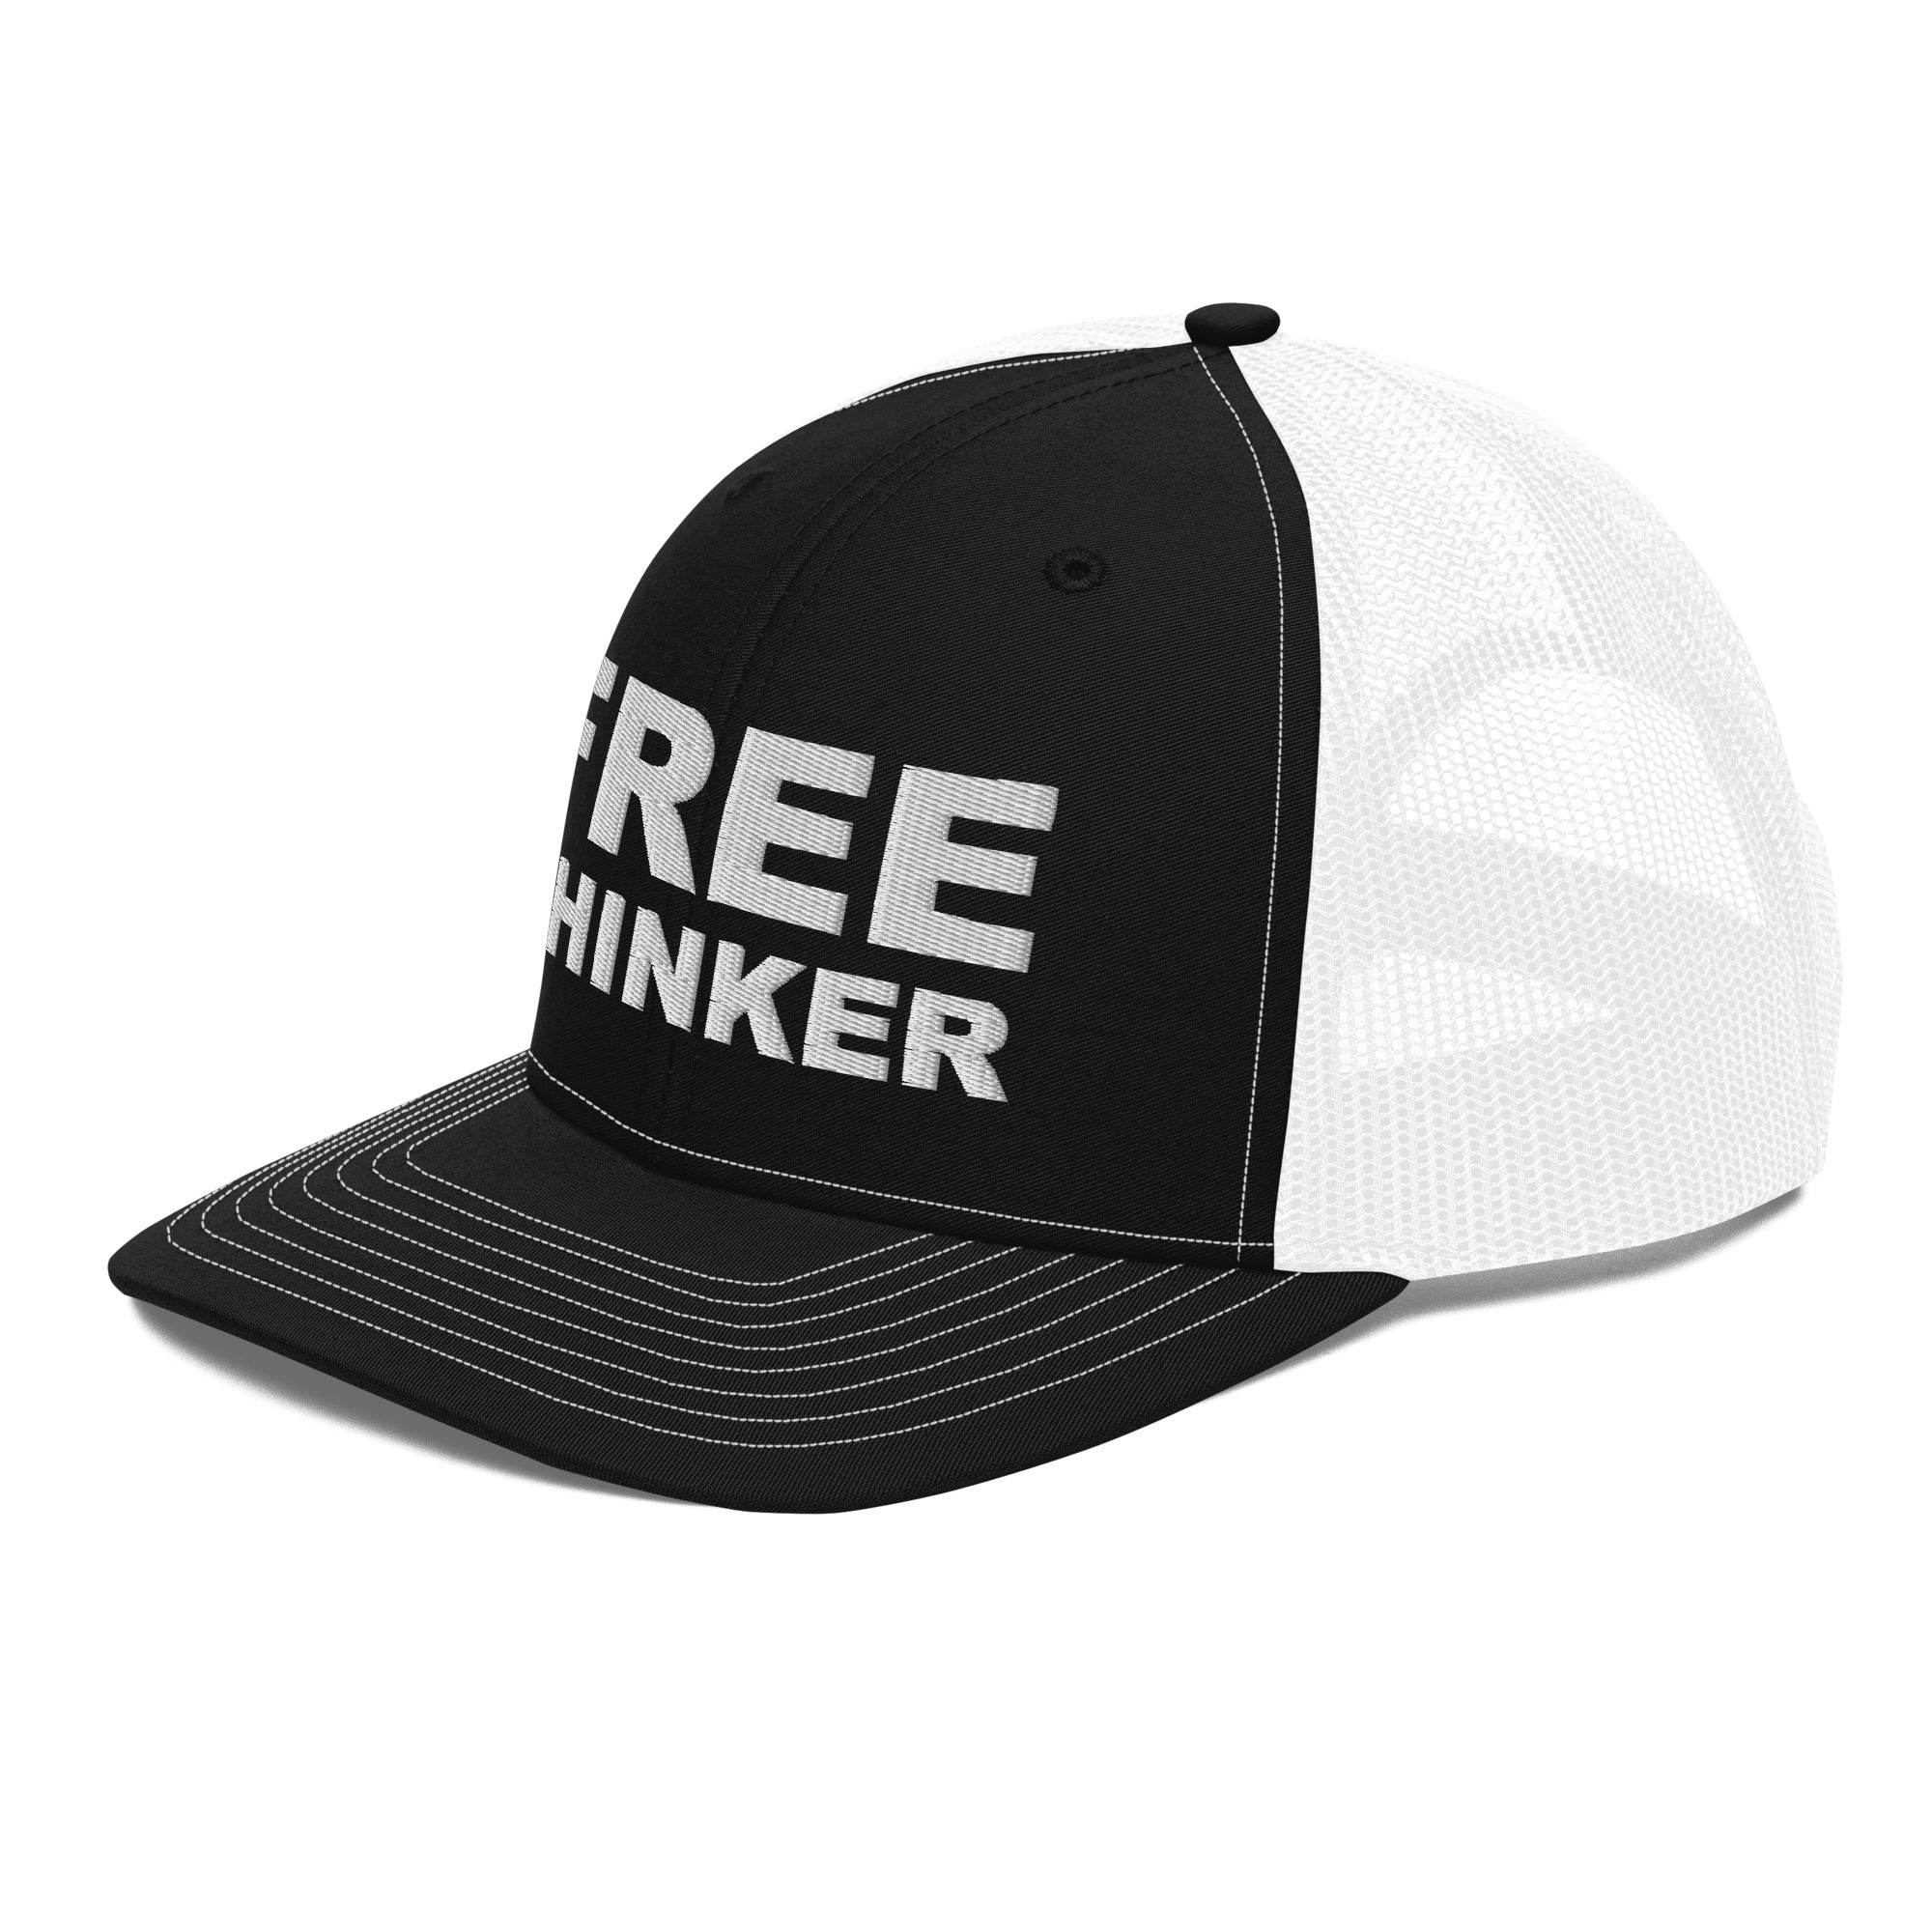 Free Thinker Richardson 112 Trucker Cap - | Drunk America 